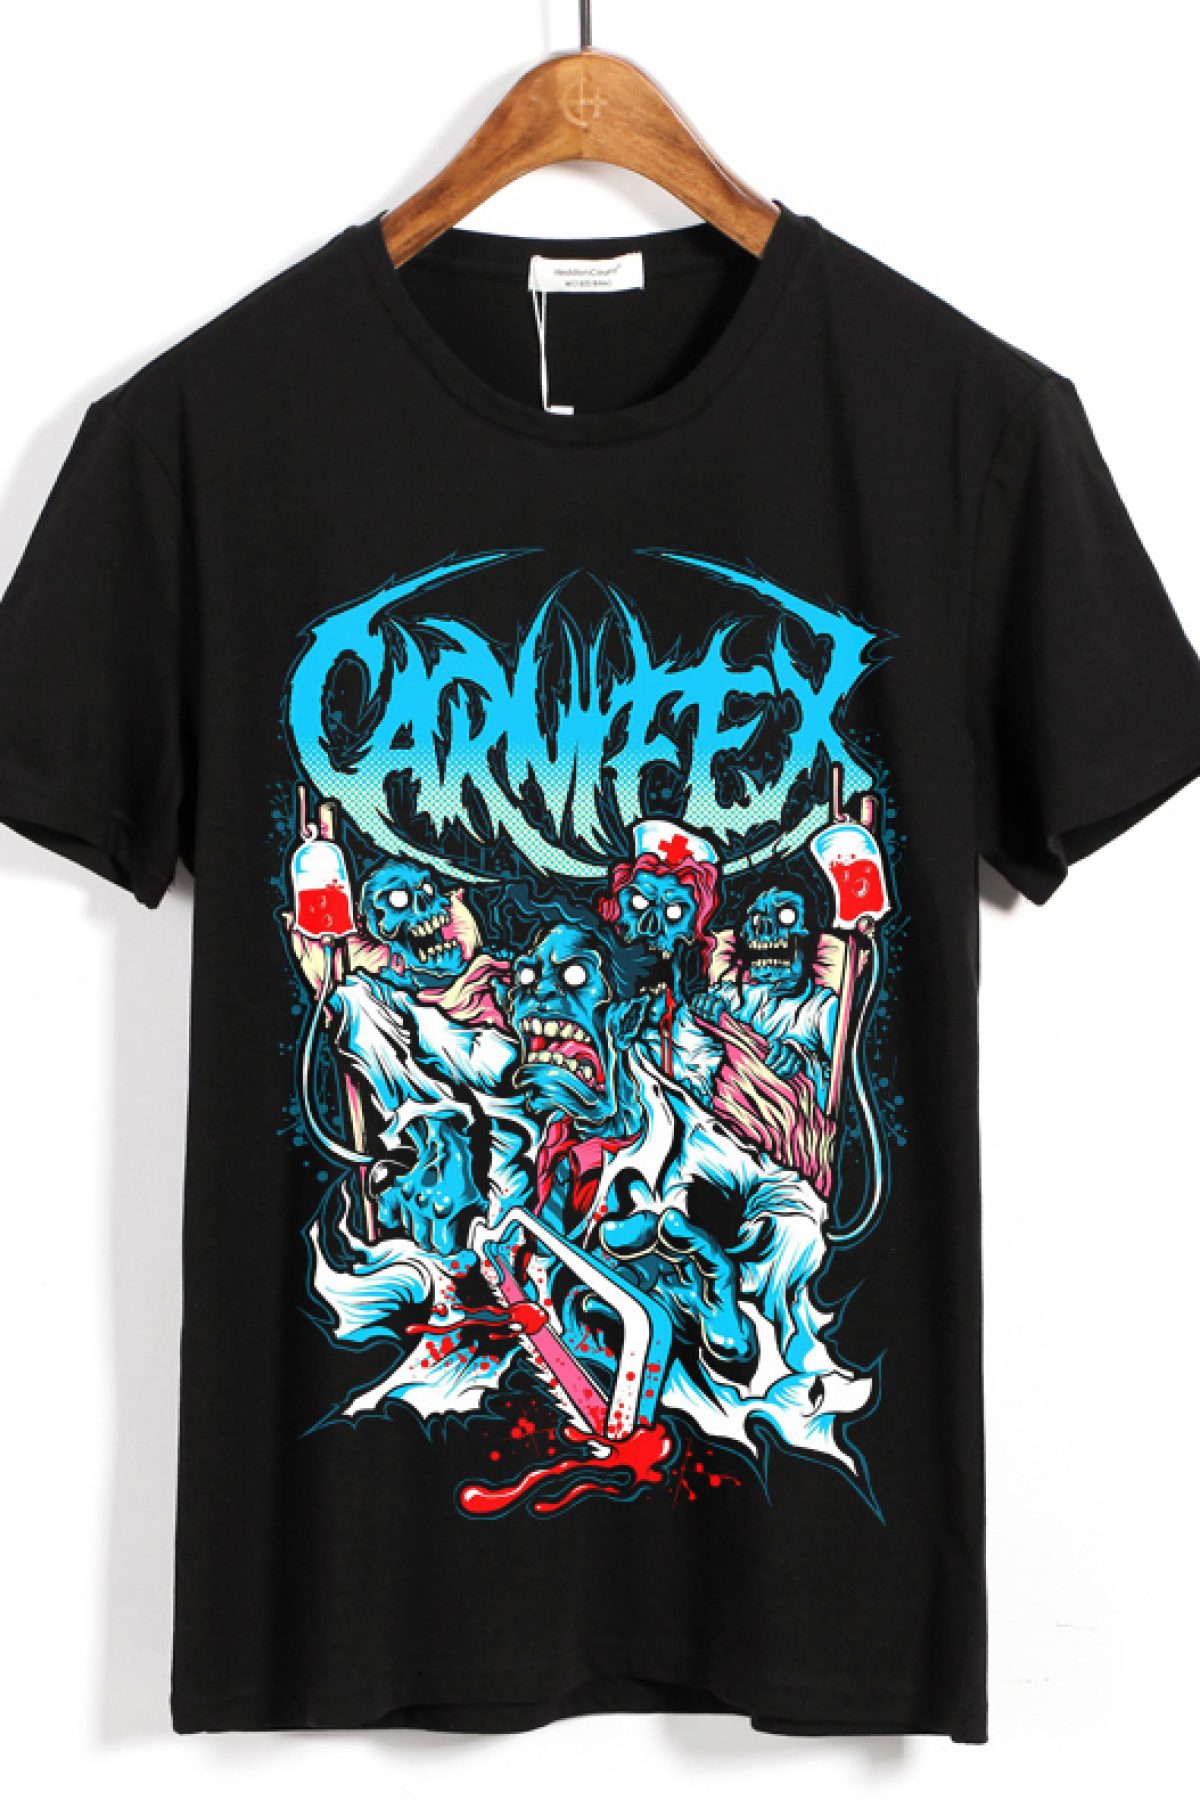 carnifex shirt